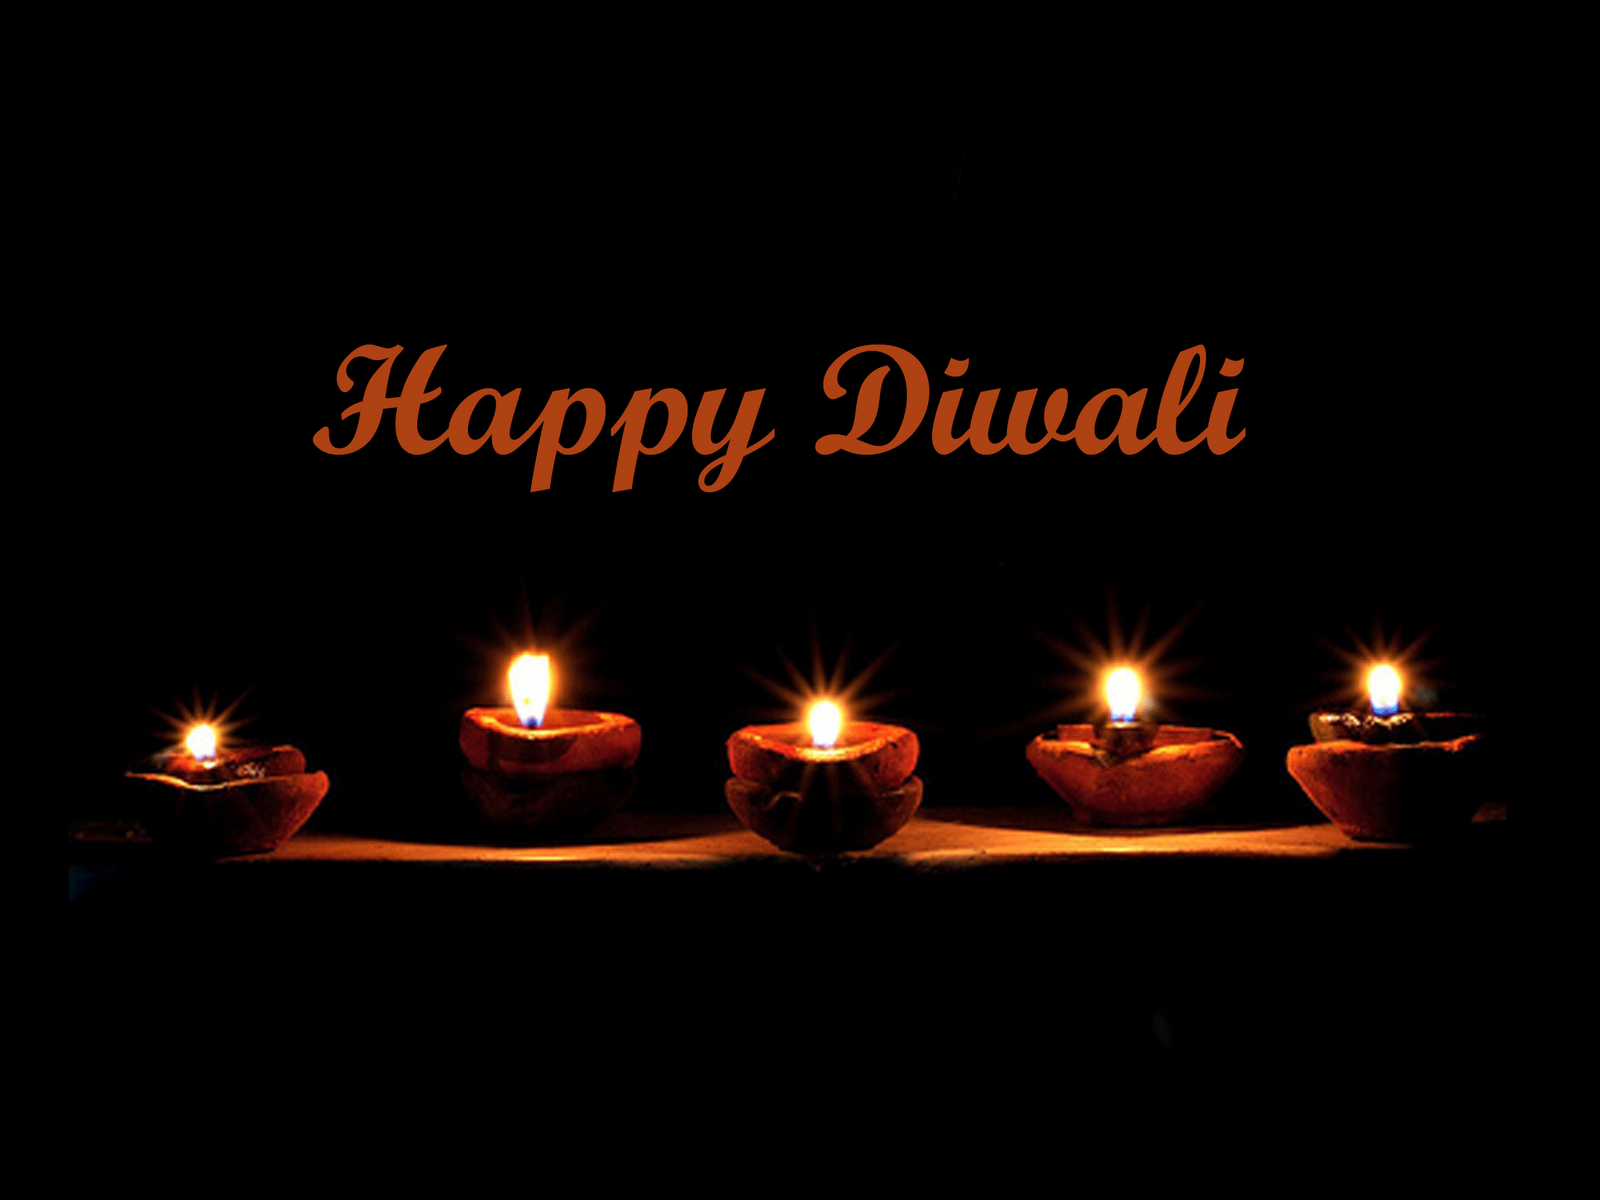 happy diwali wallpaper hd widescreen,candle,lighting,diwali,darkness,holiday